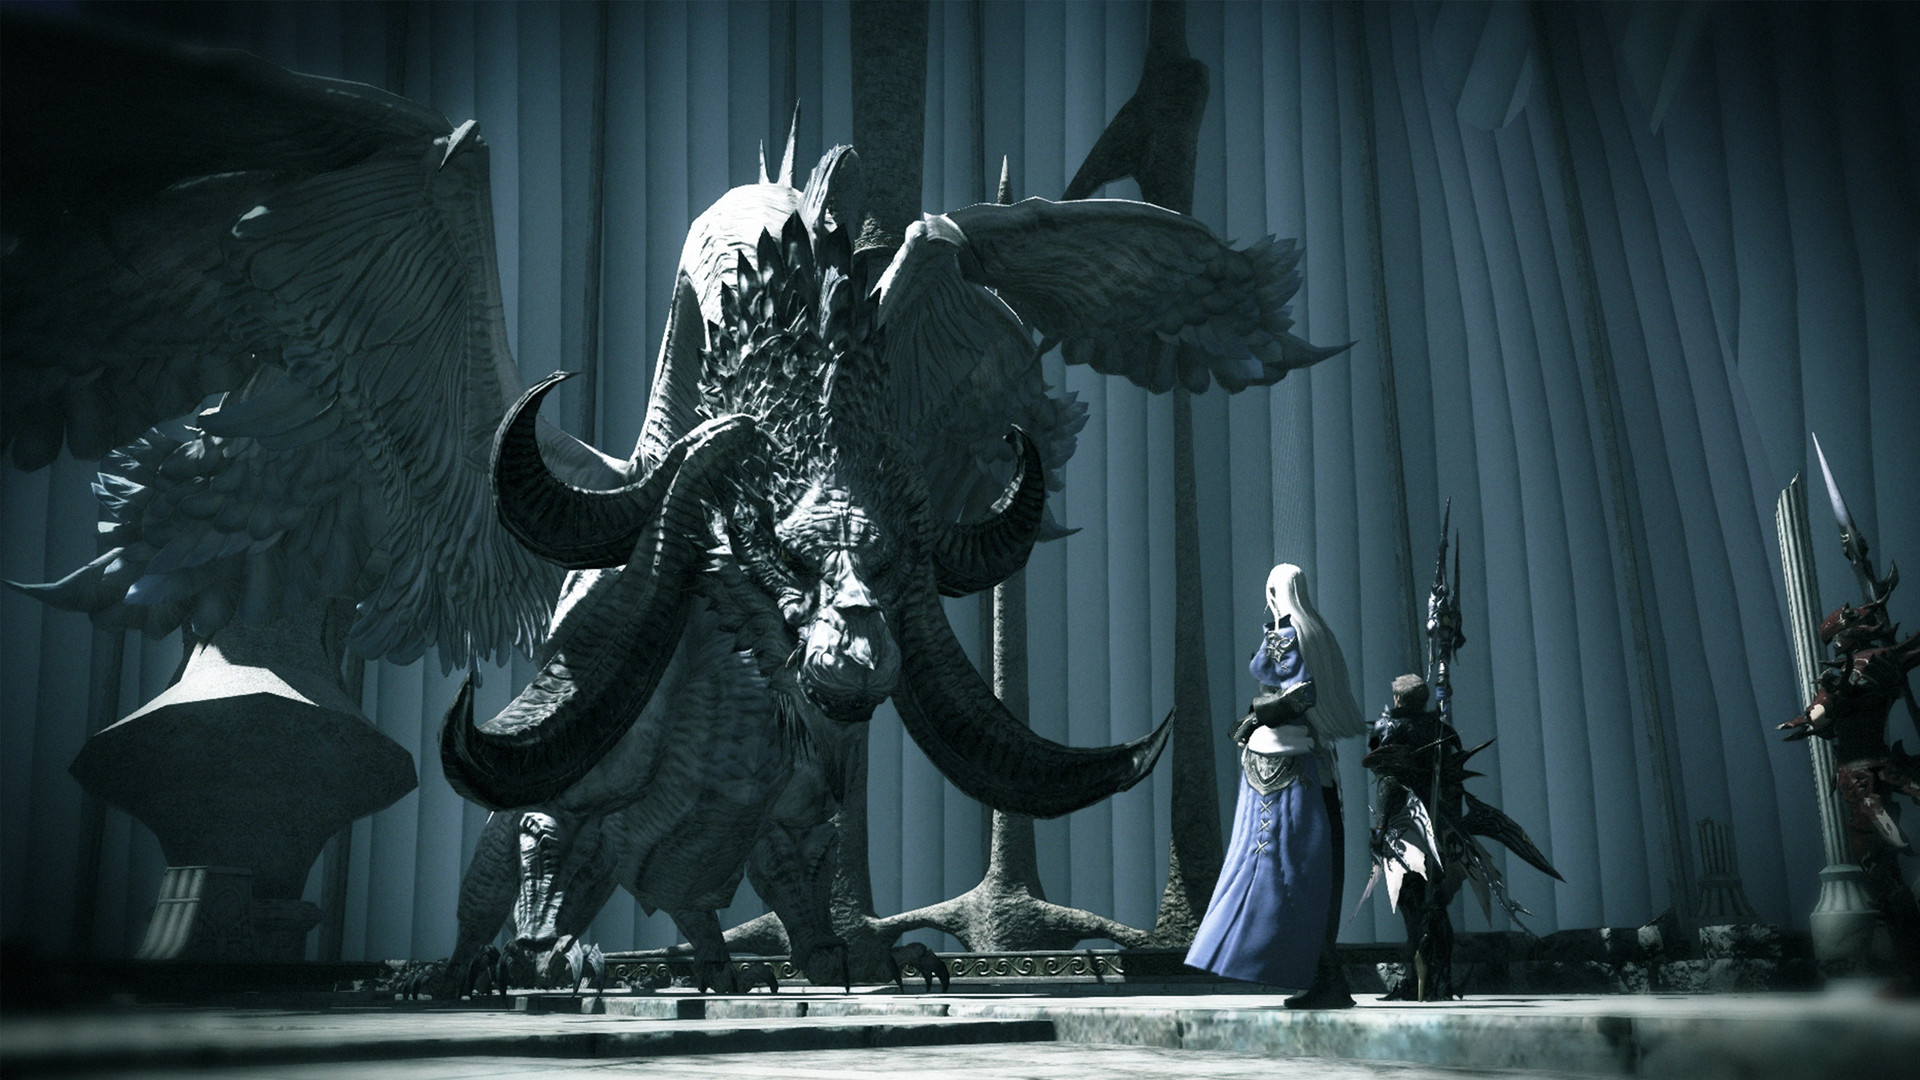 Final Fantasy Xiv Online Free Trial On Steam